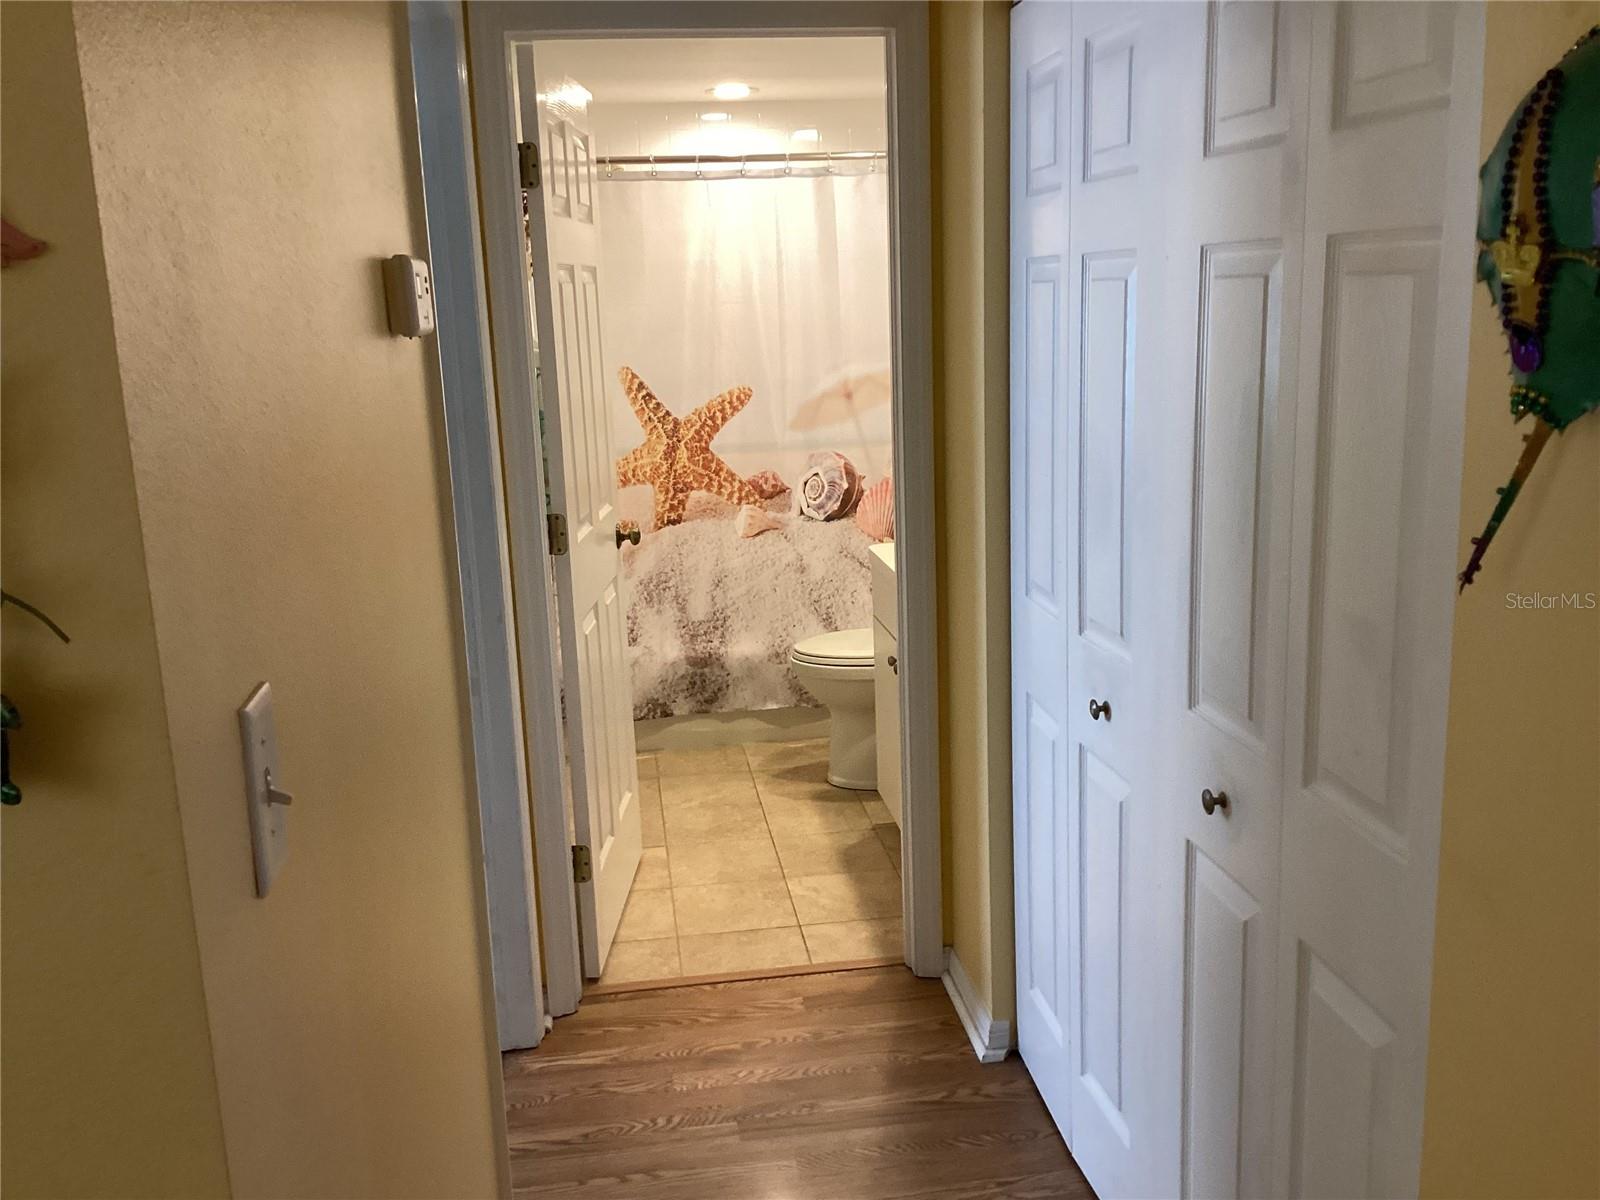 Hallway closet to guest bathroom